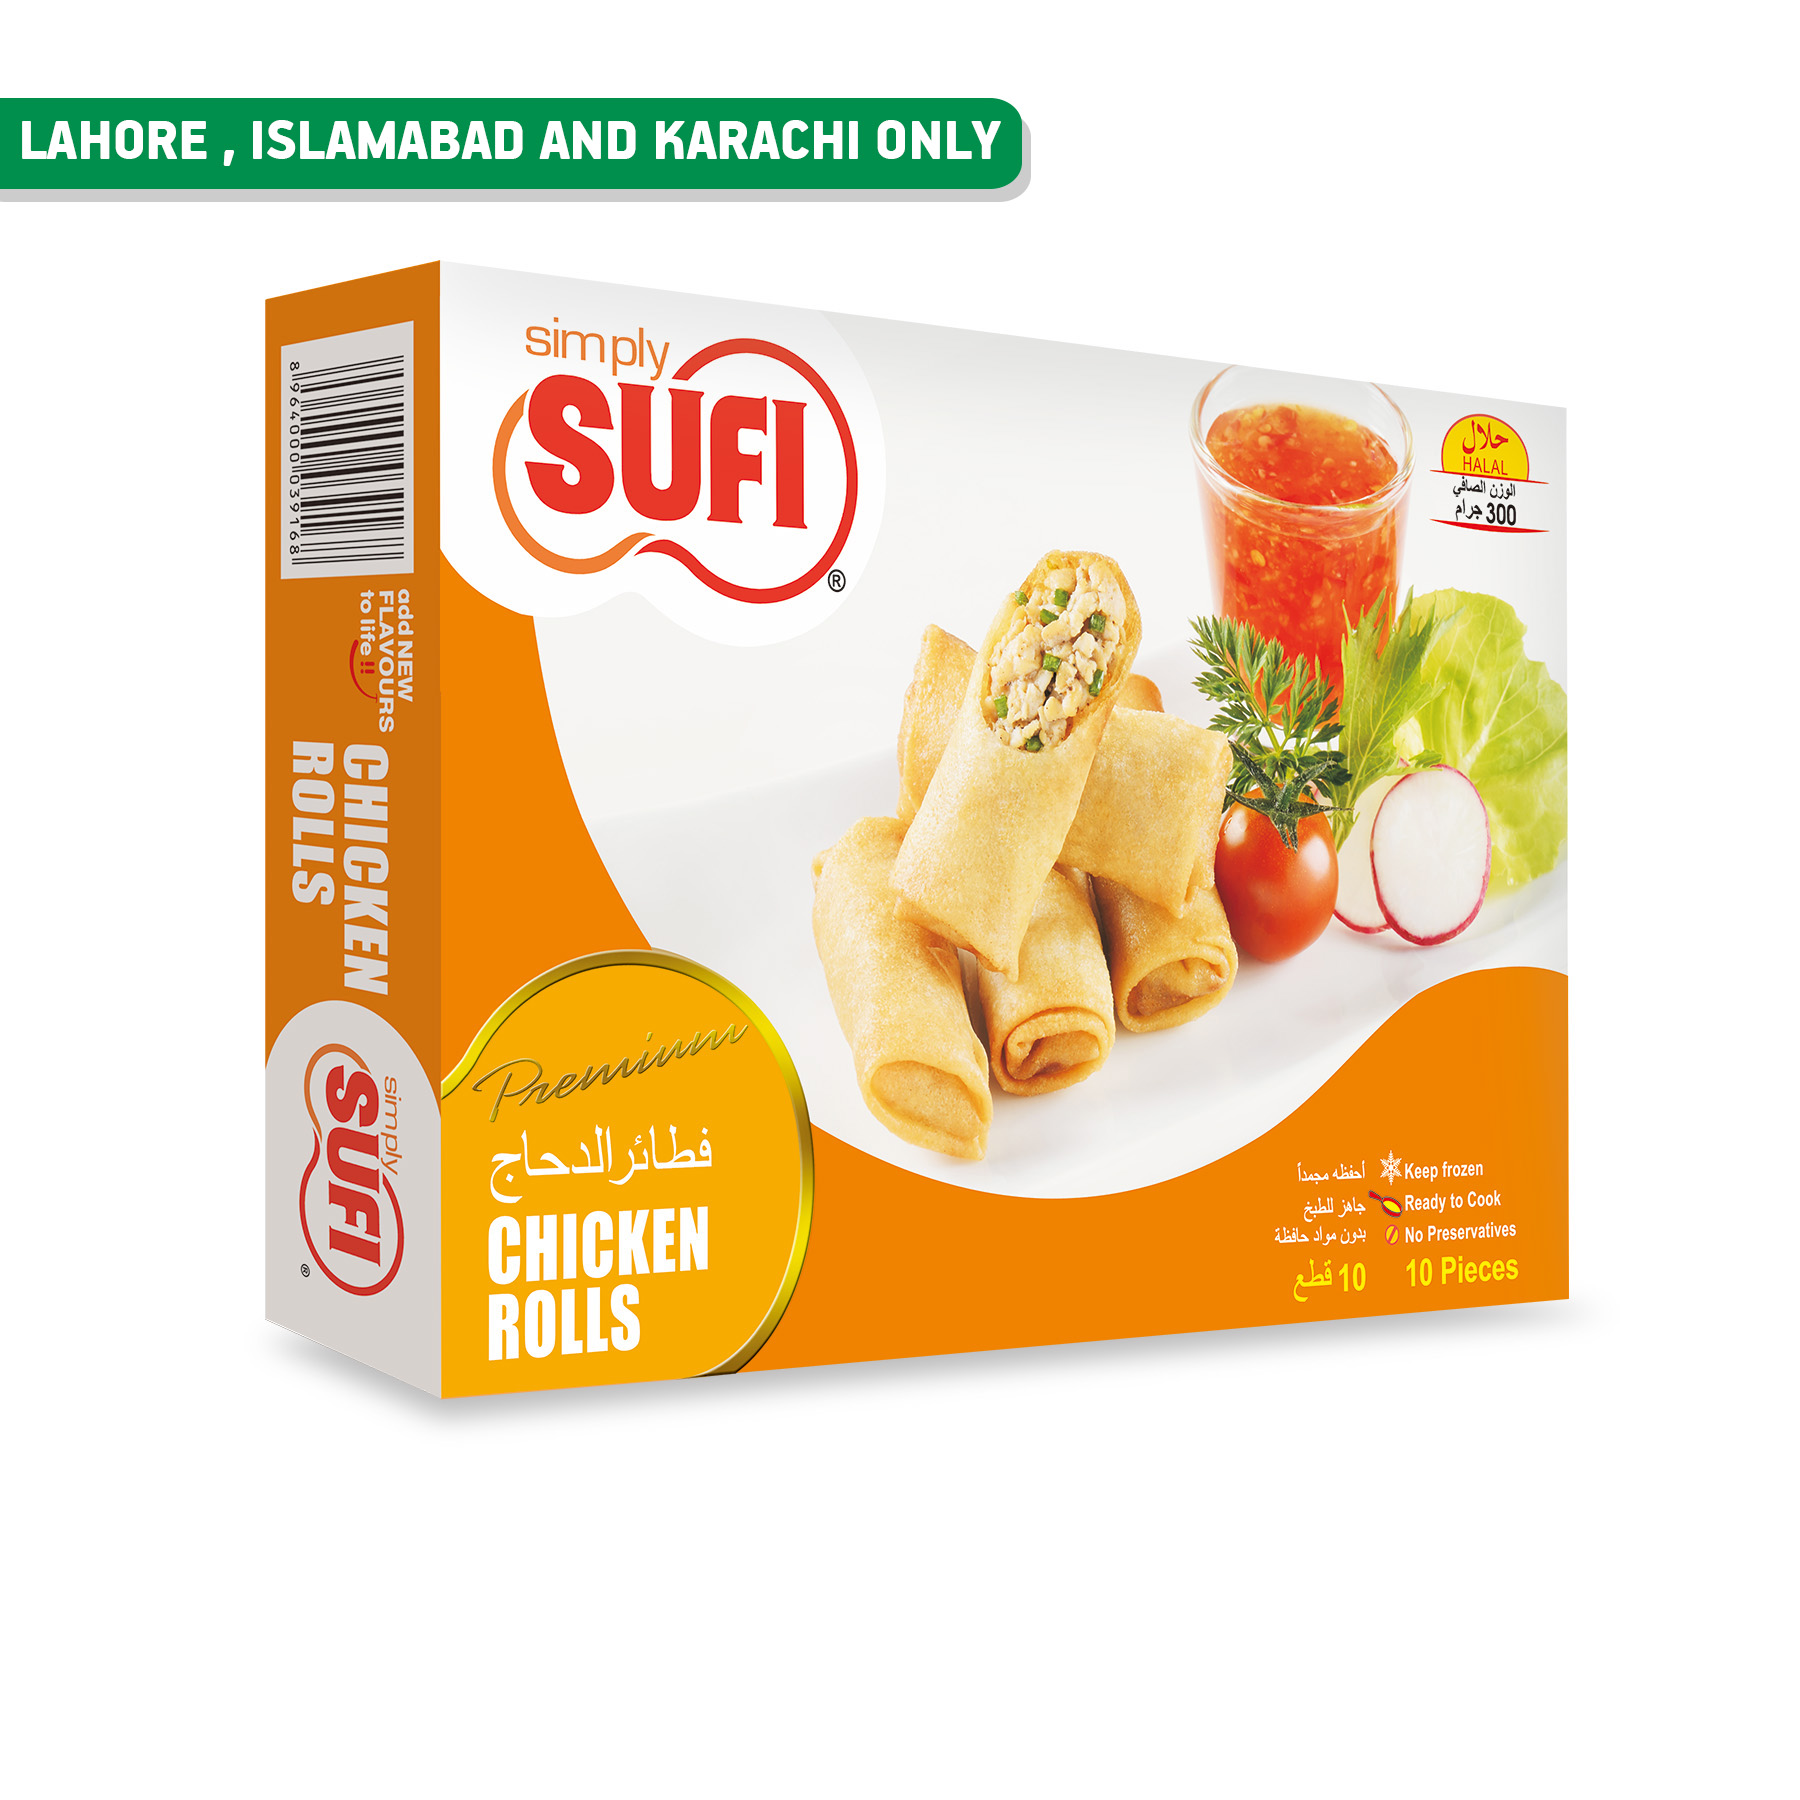 Simply Sufi Chicken Rolls